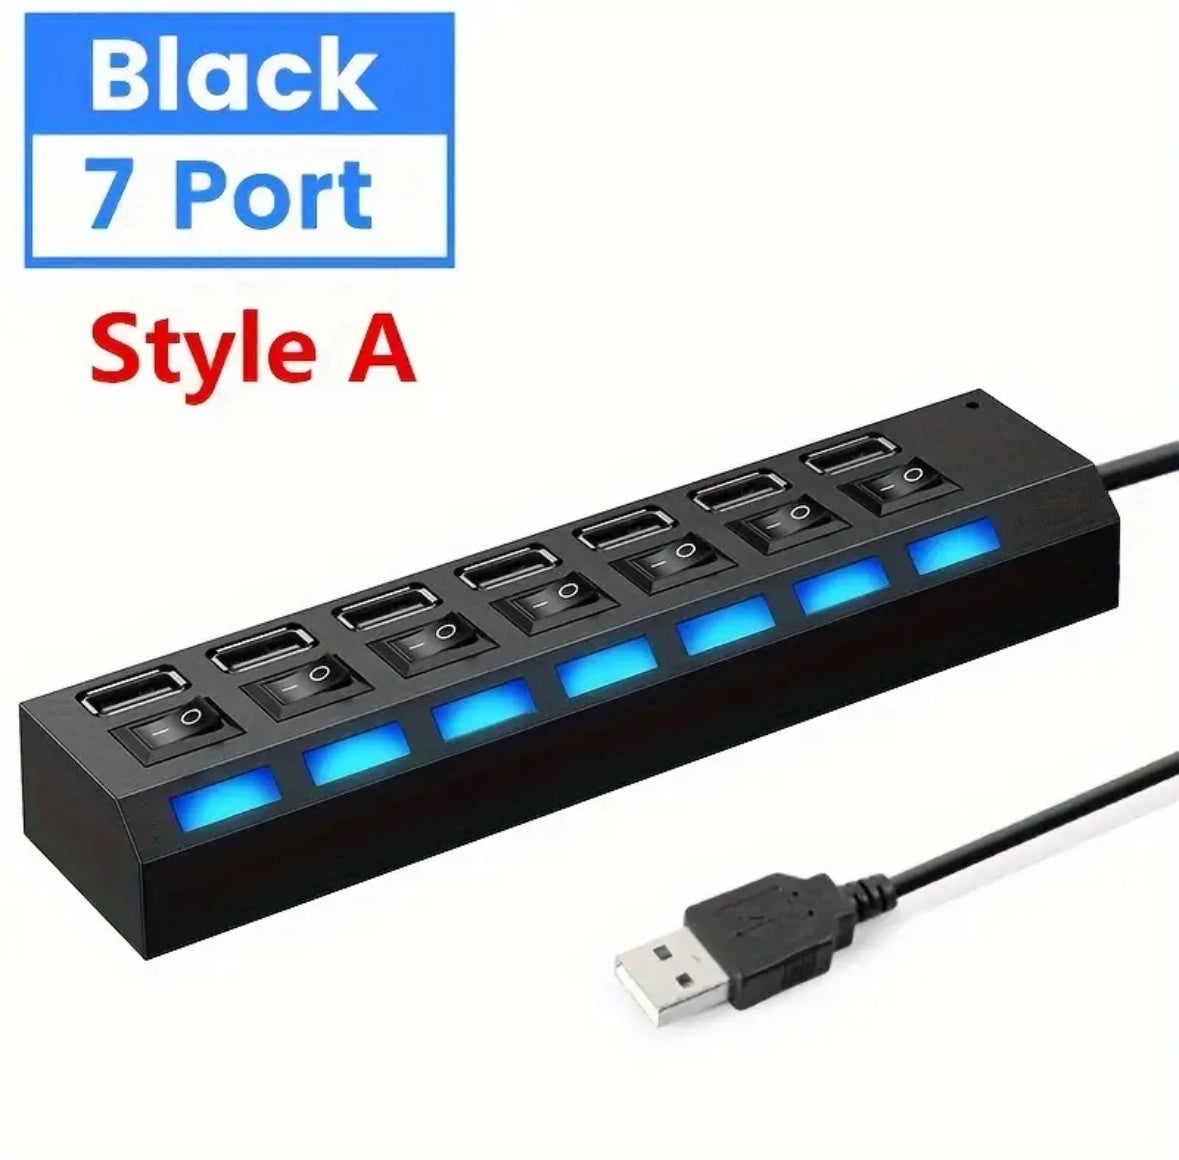 7 Port USB Extension (black)